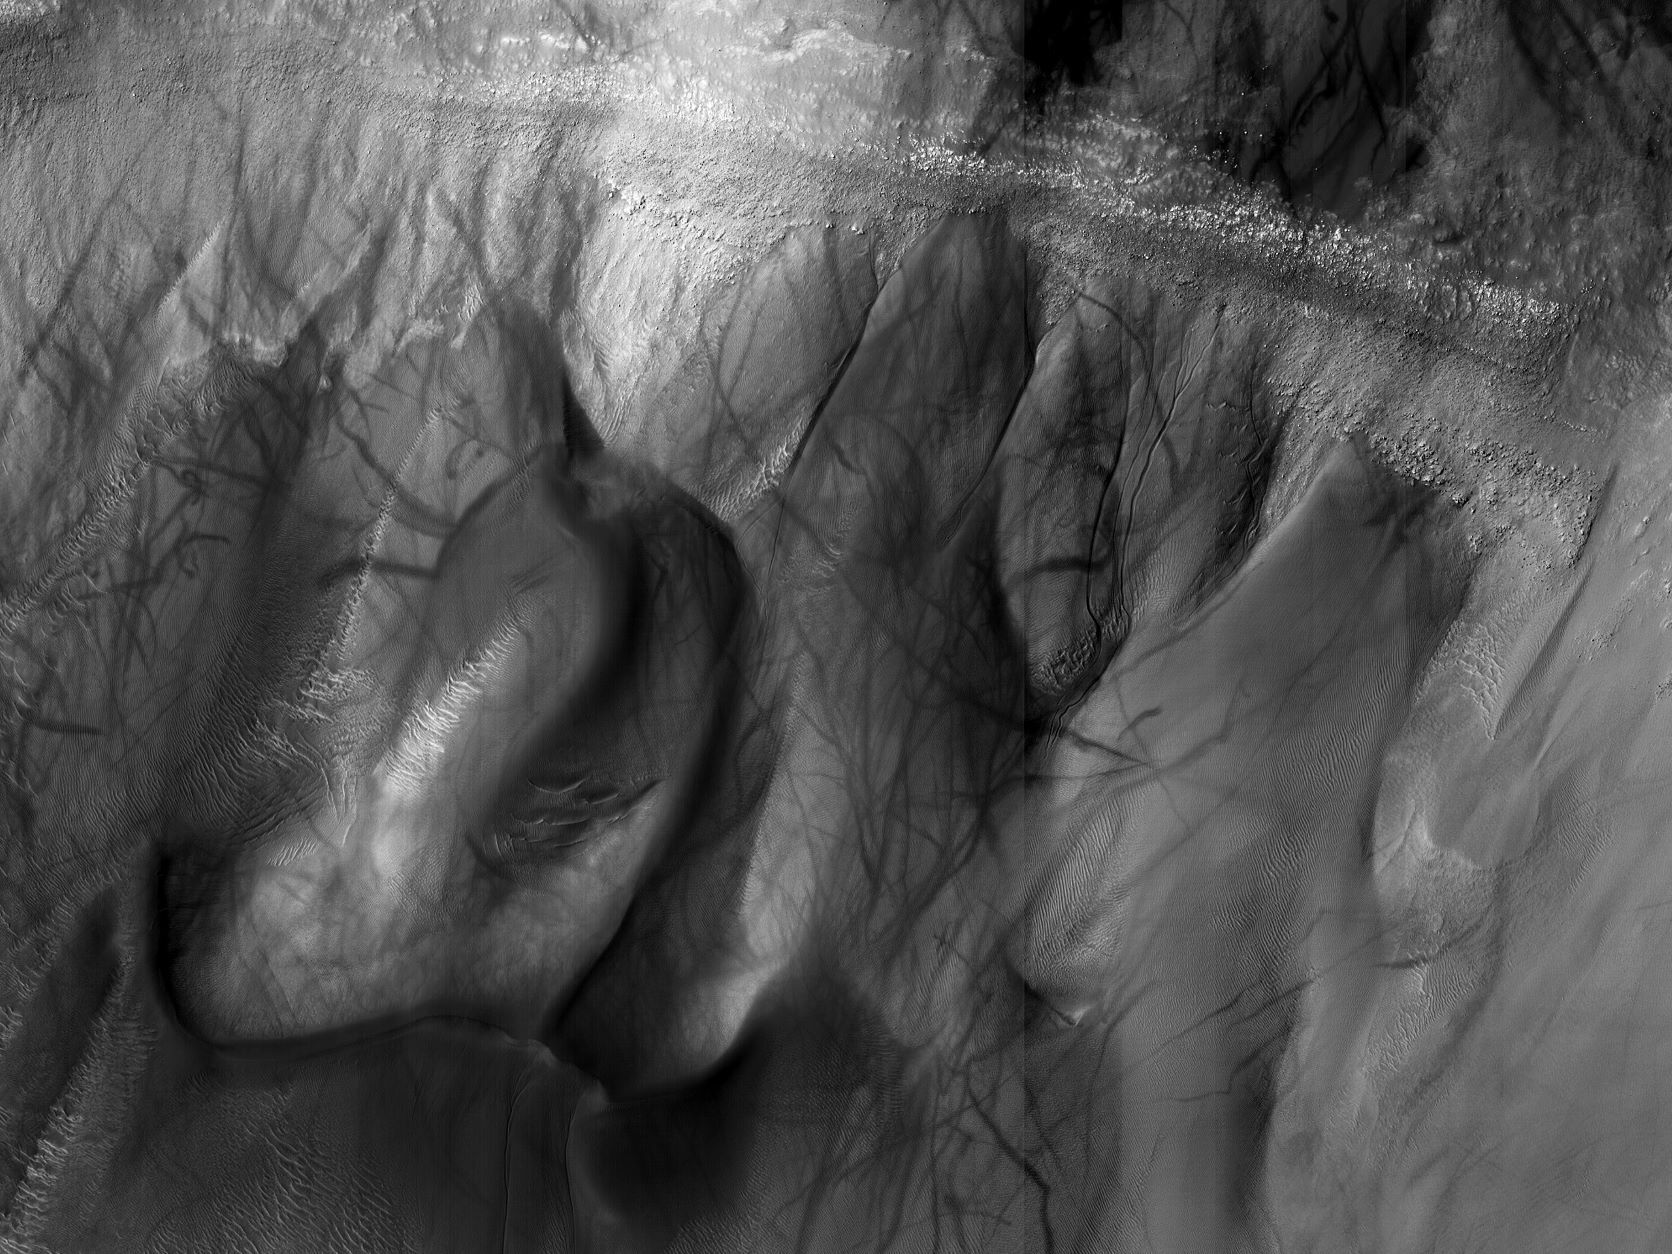 dust devil tracks inside a Mars crater